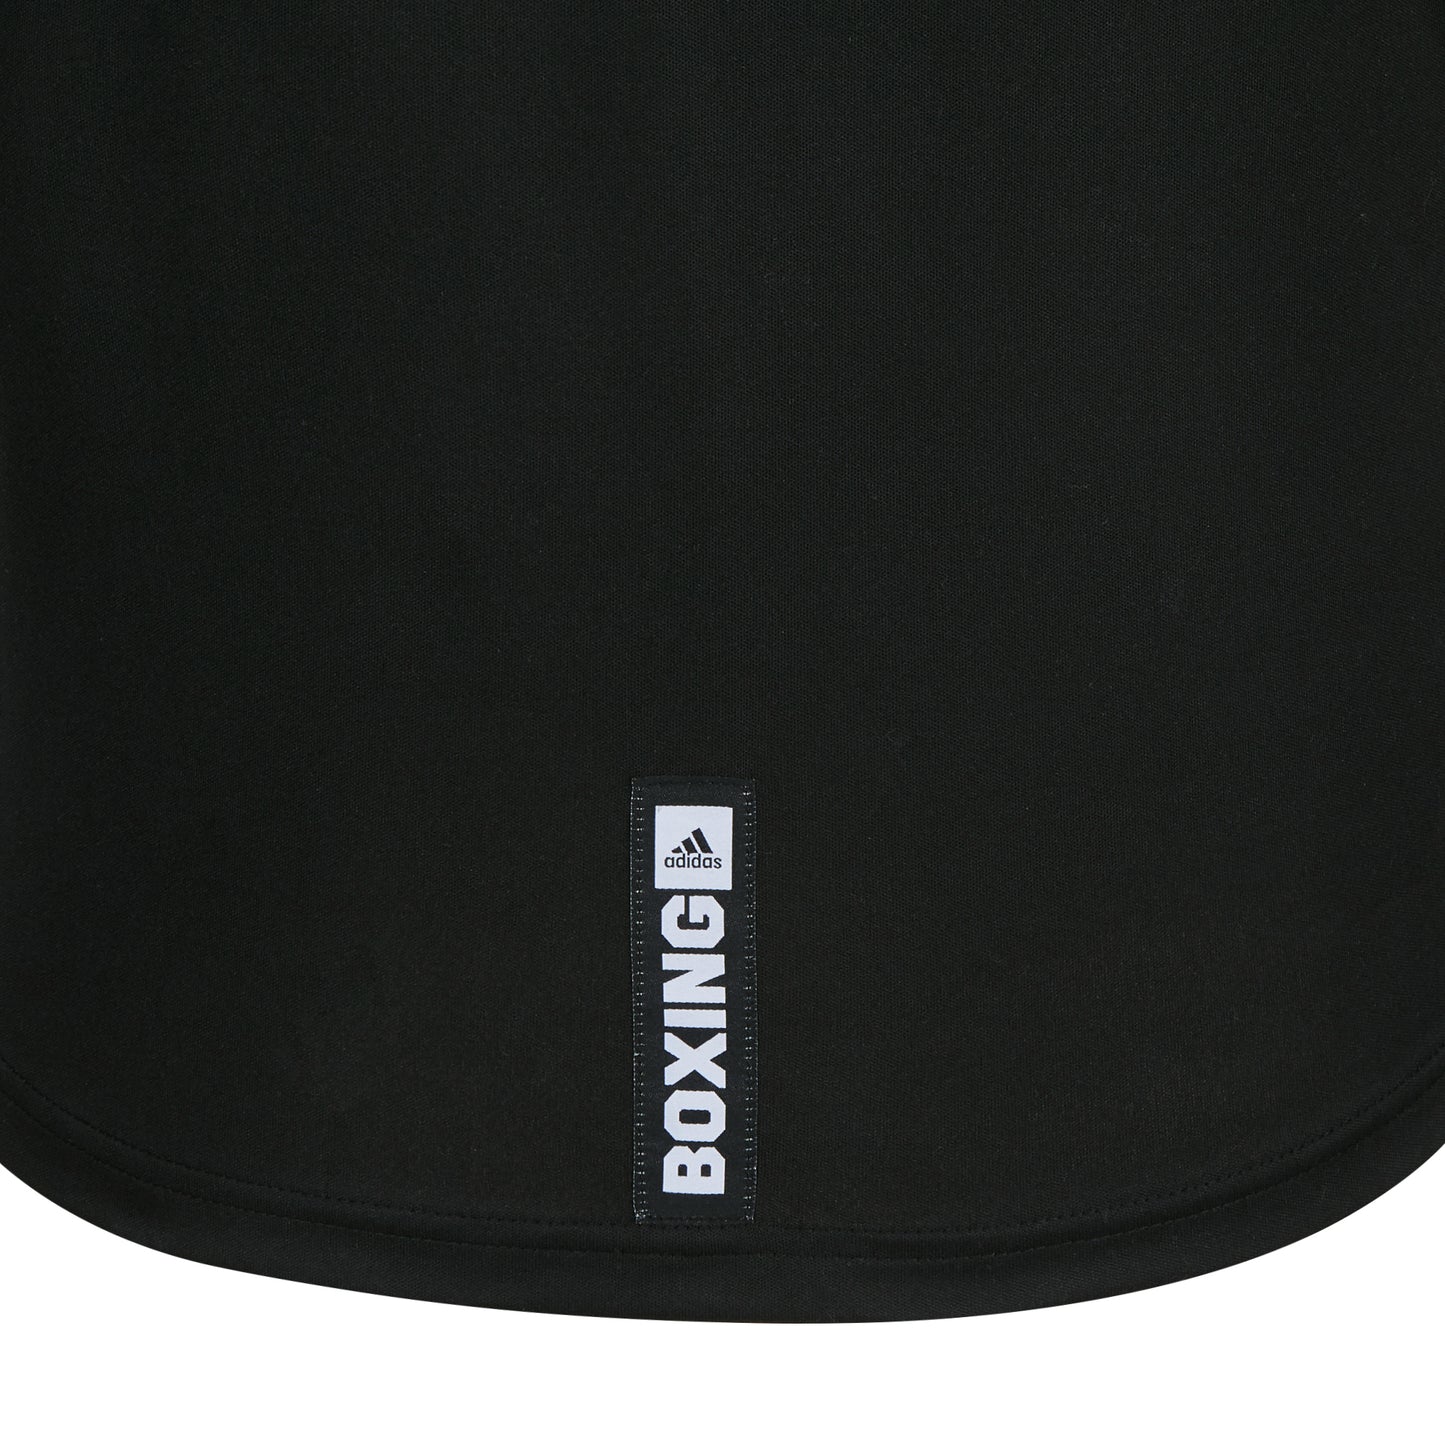 Bxwtls01 Boxwear Tech Long Sleeve Top Black 07